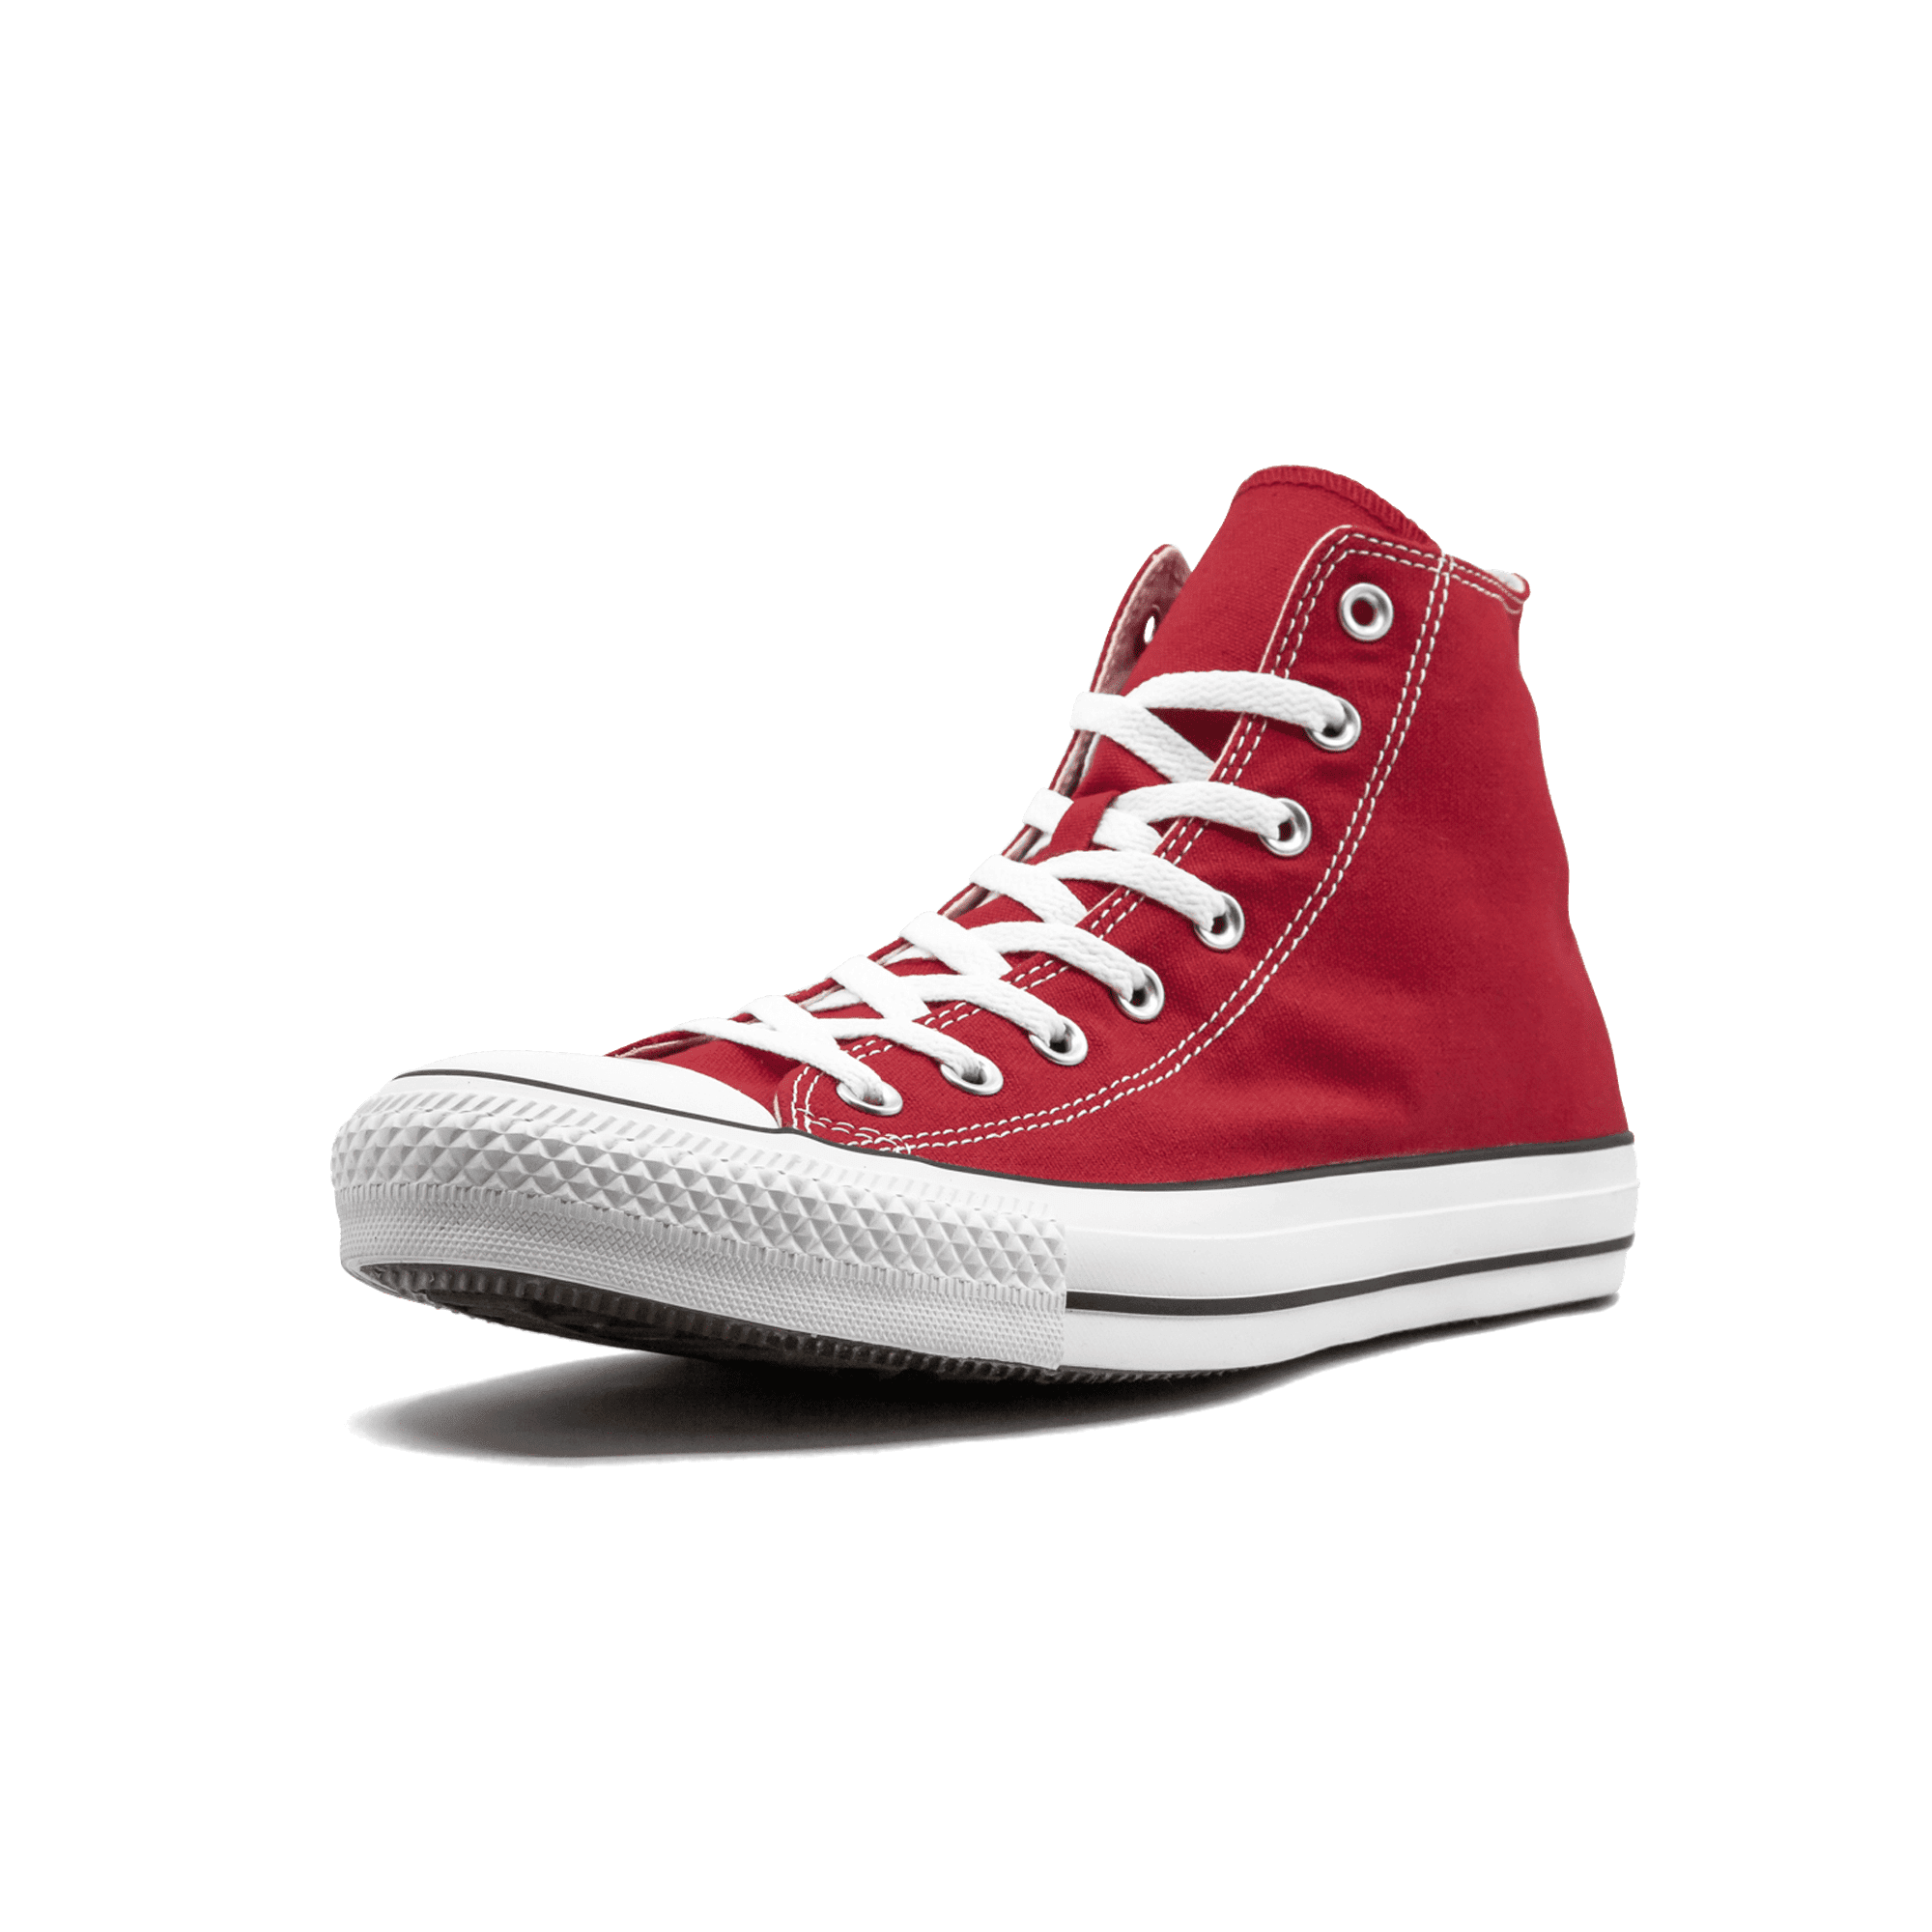 Converse Chuck Taylor All Star Hi  “Red” - ParoissesaintefoyStore